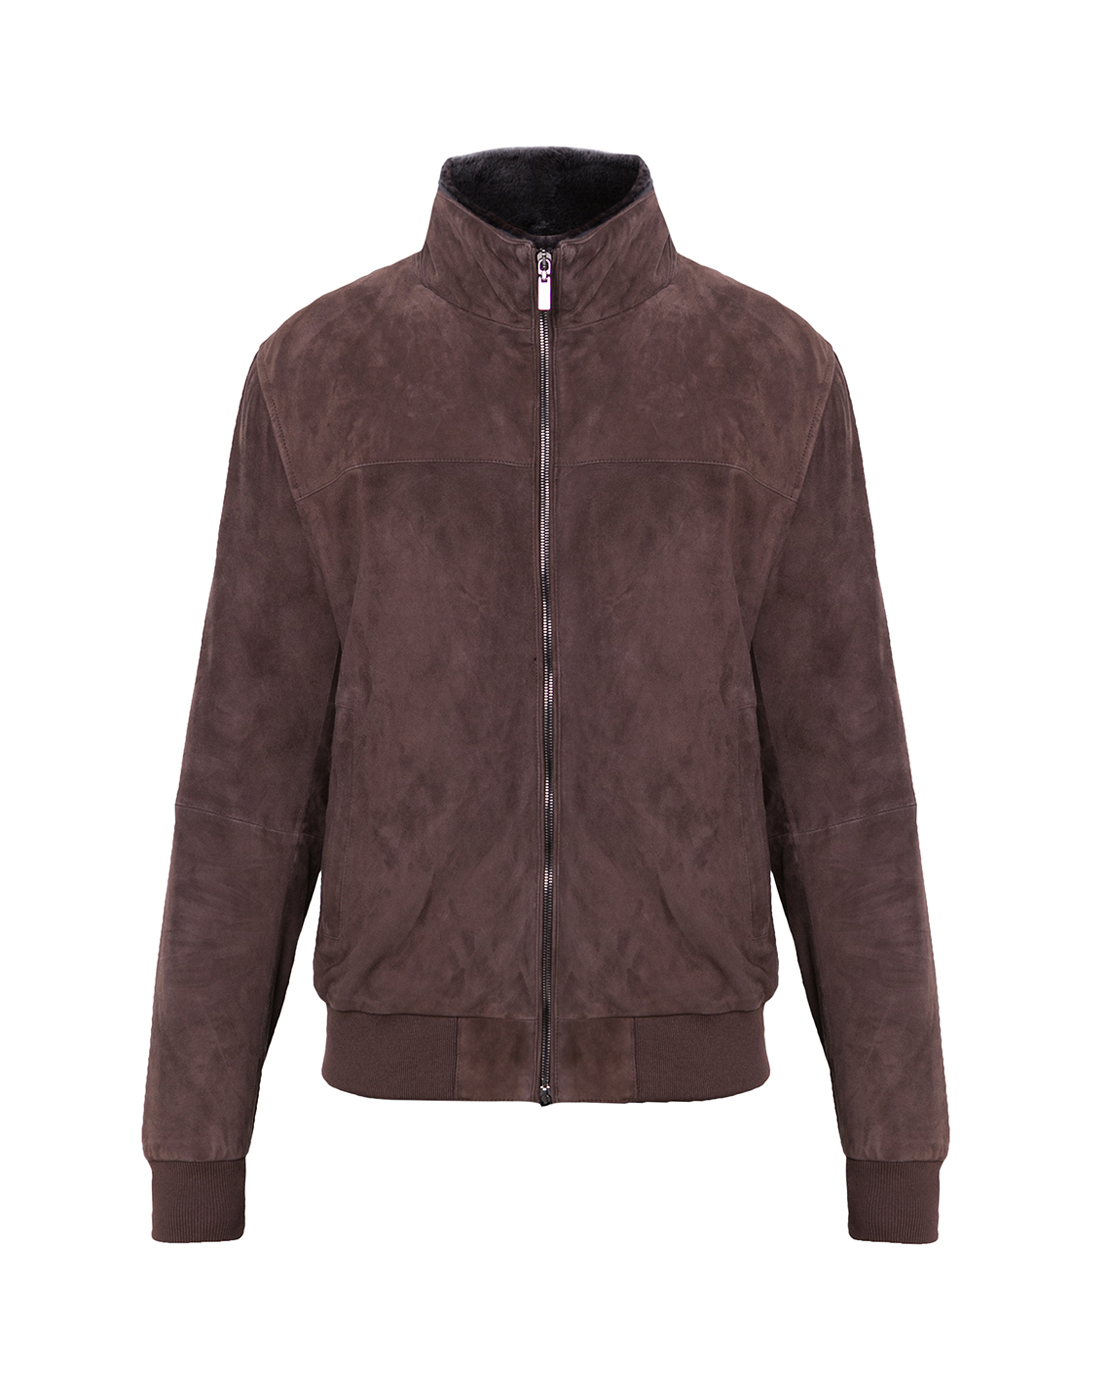 Куртка коричневая мужская GIMO'S S3W20.1.160.85.C03.148.139-1